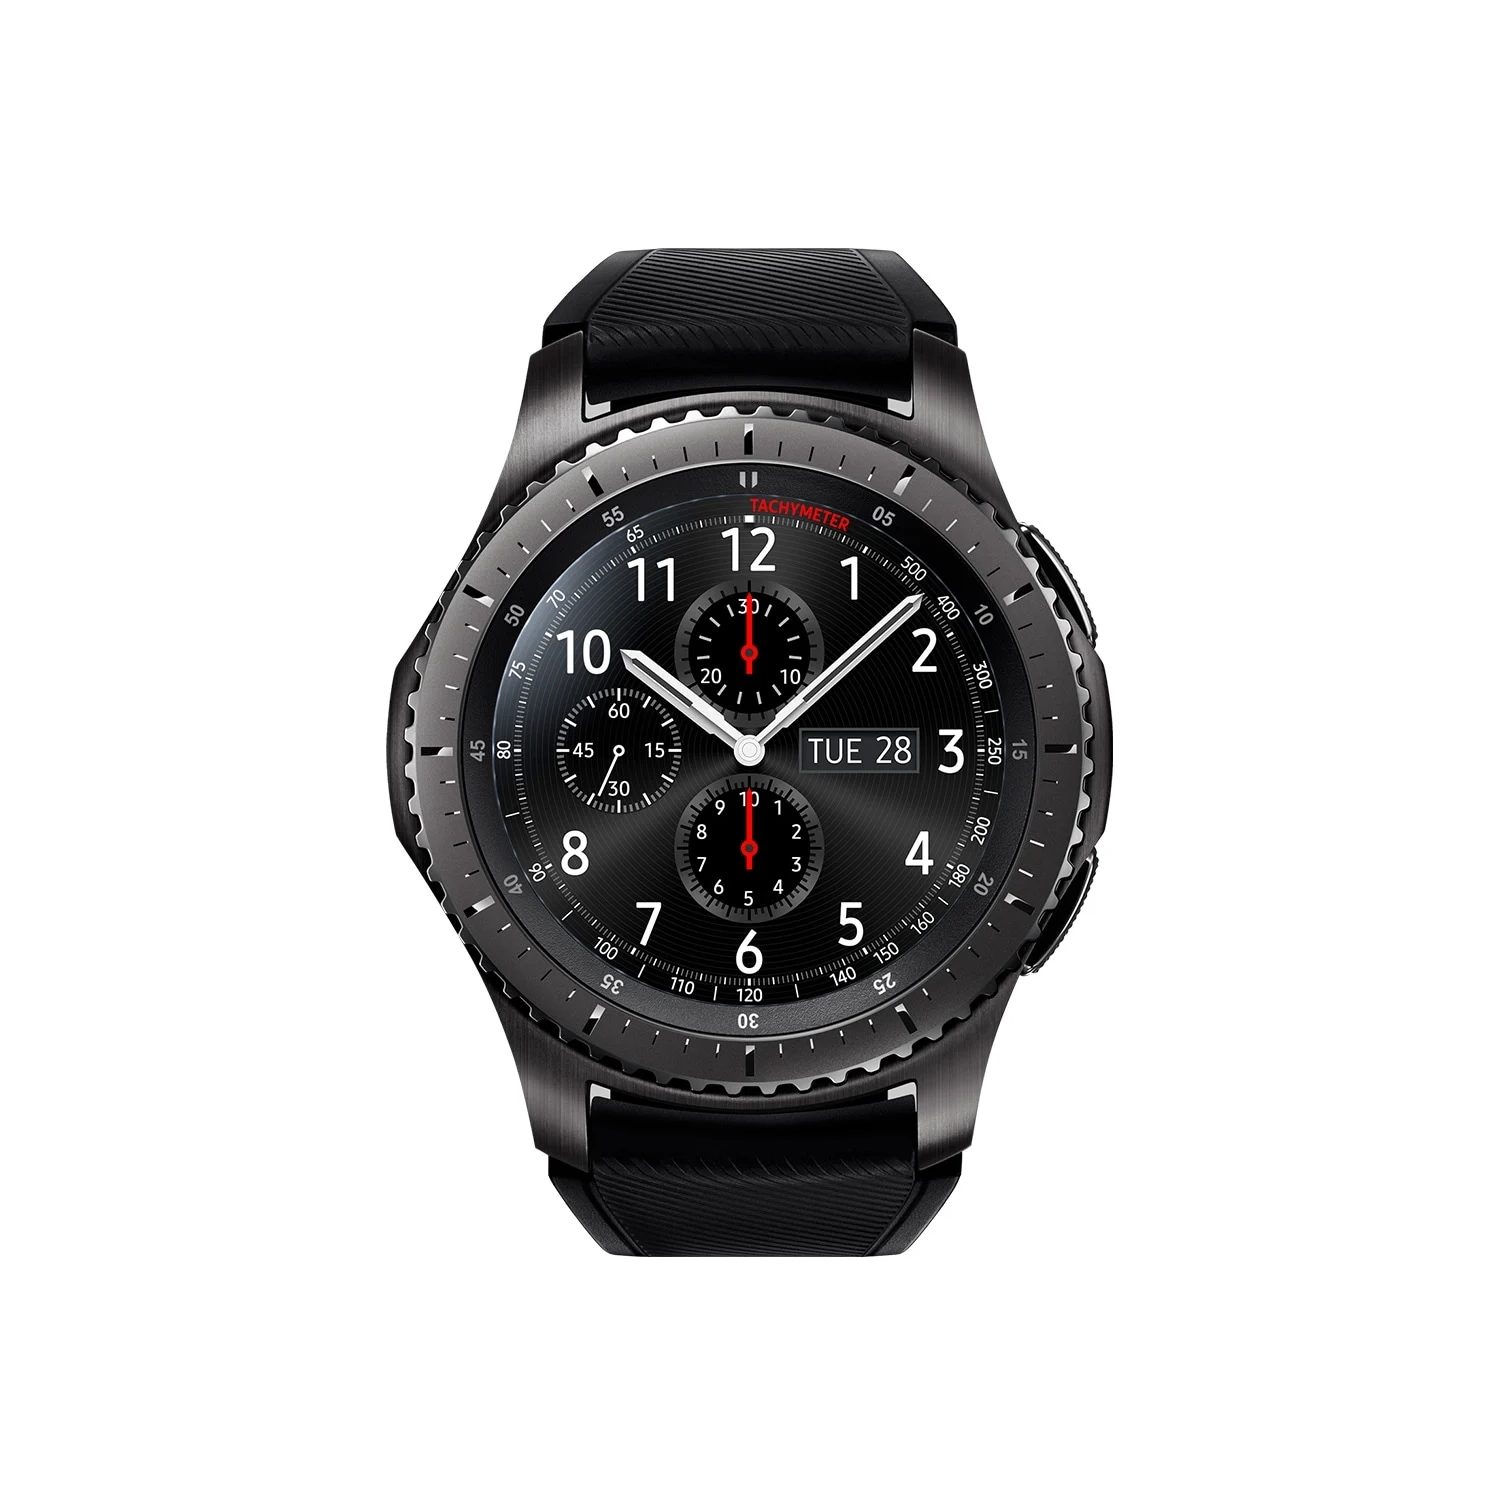 Samsung Galaxy Gear S3 Frontier SM-R760 Smartwatch, International Version Black Open Box